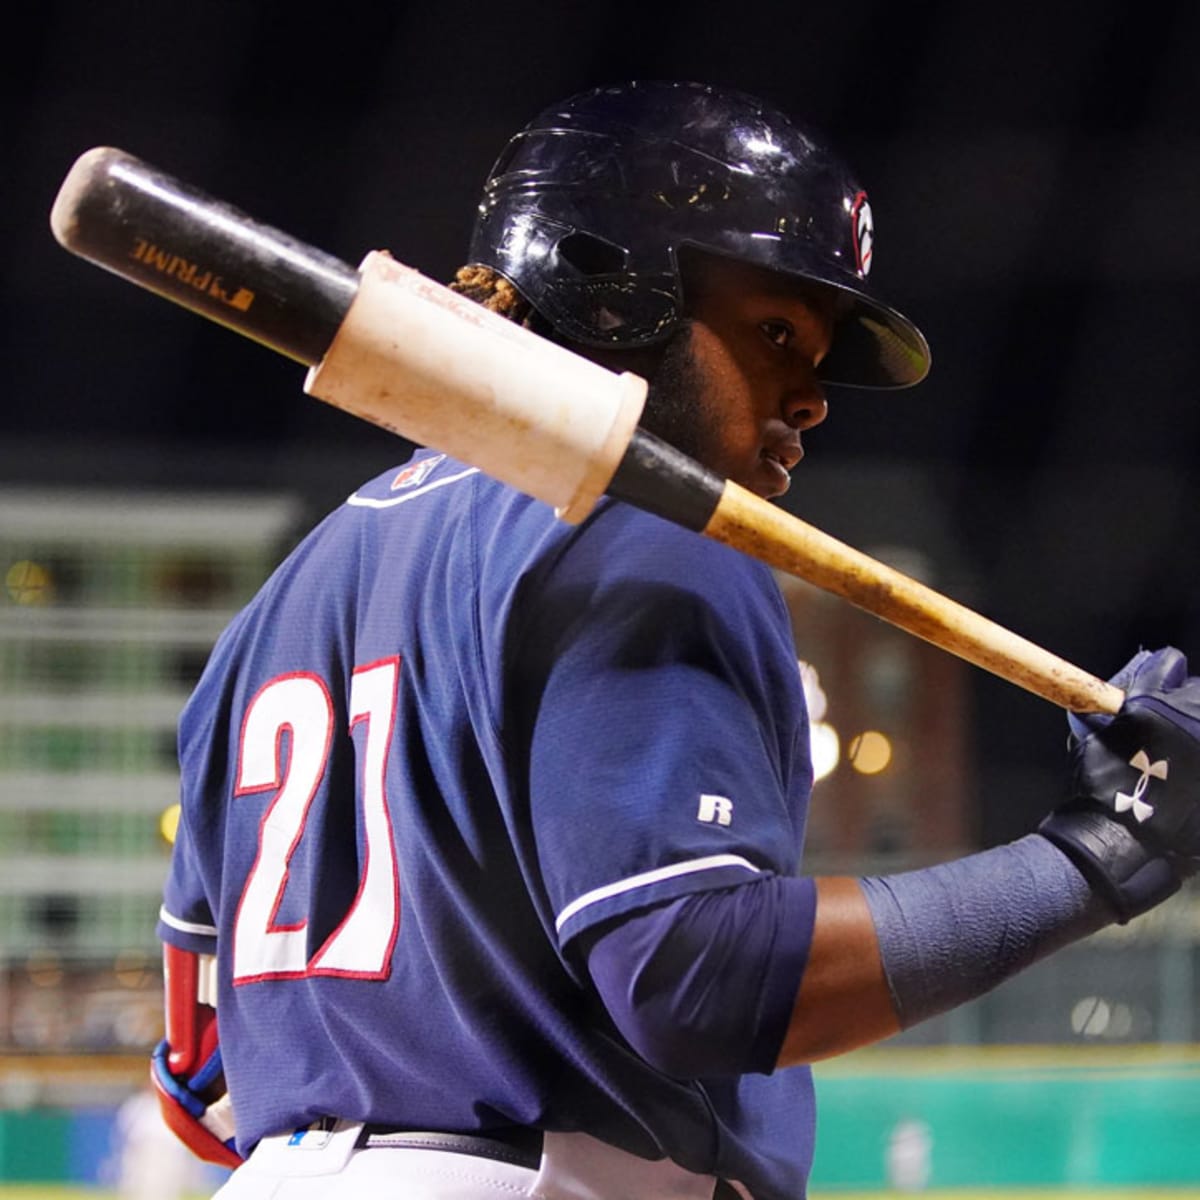 The 19-year-old Vladimir Guerrero Jr. is baseball's top prospect